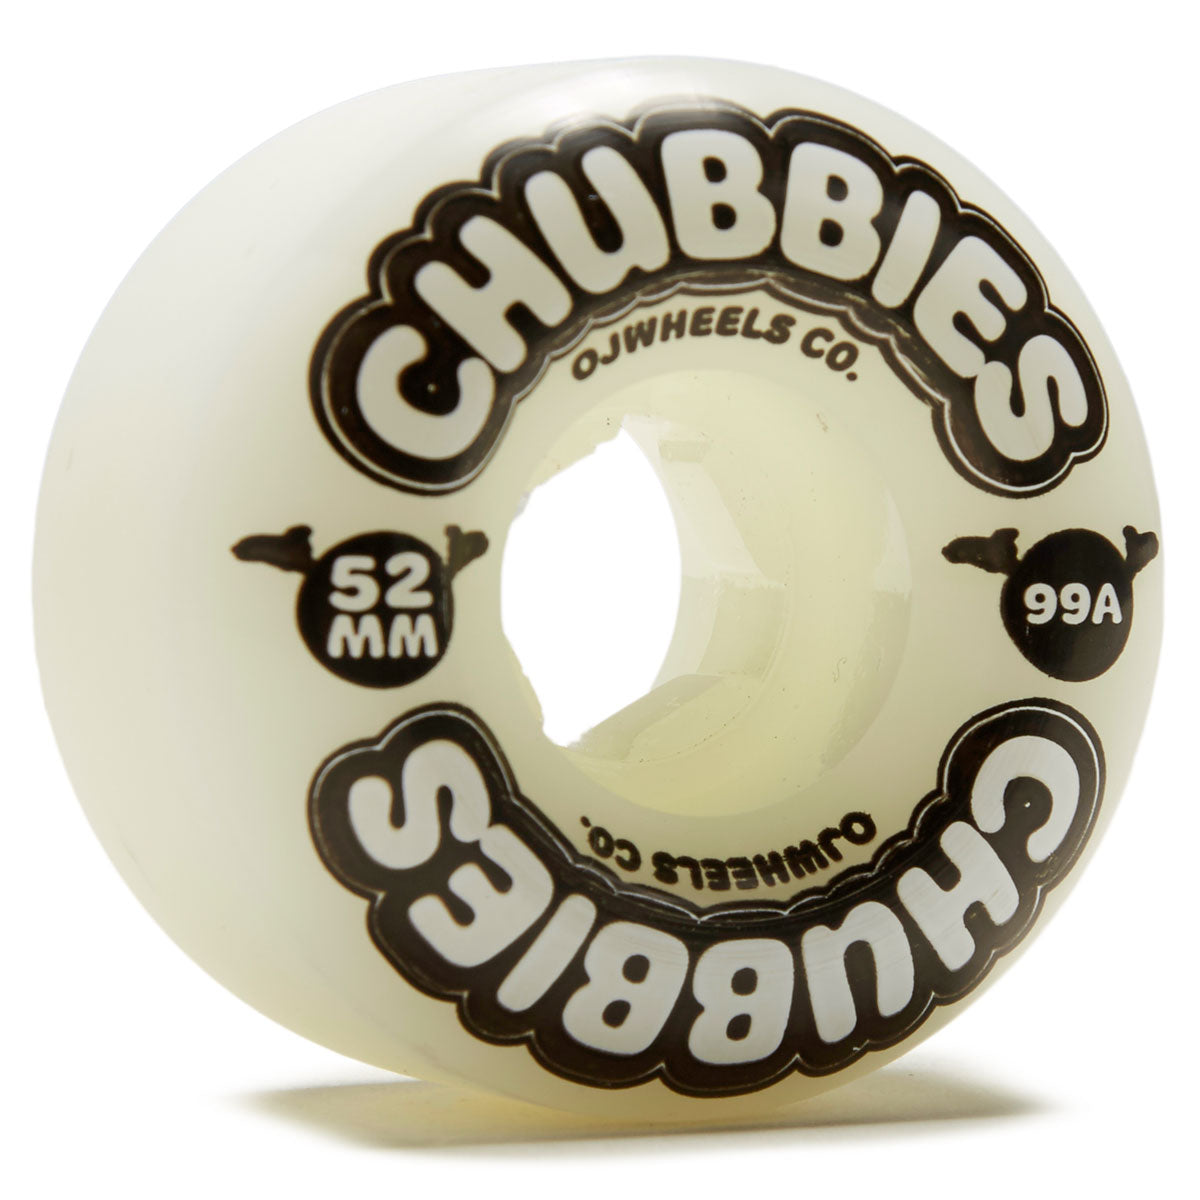 OJ Chubbies 99a Skateboard Wheels - White - 52mm image 1